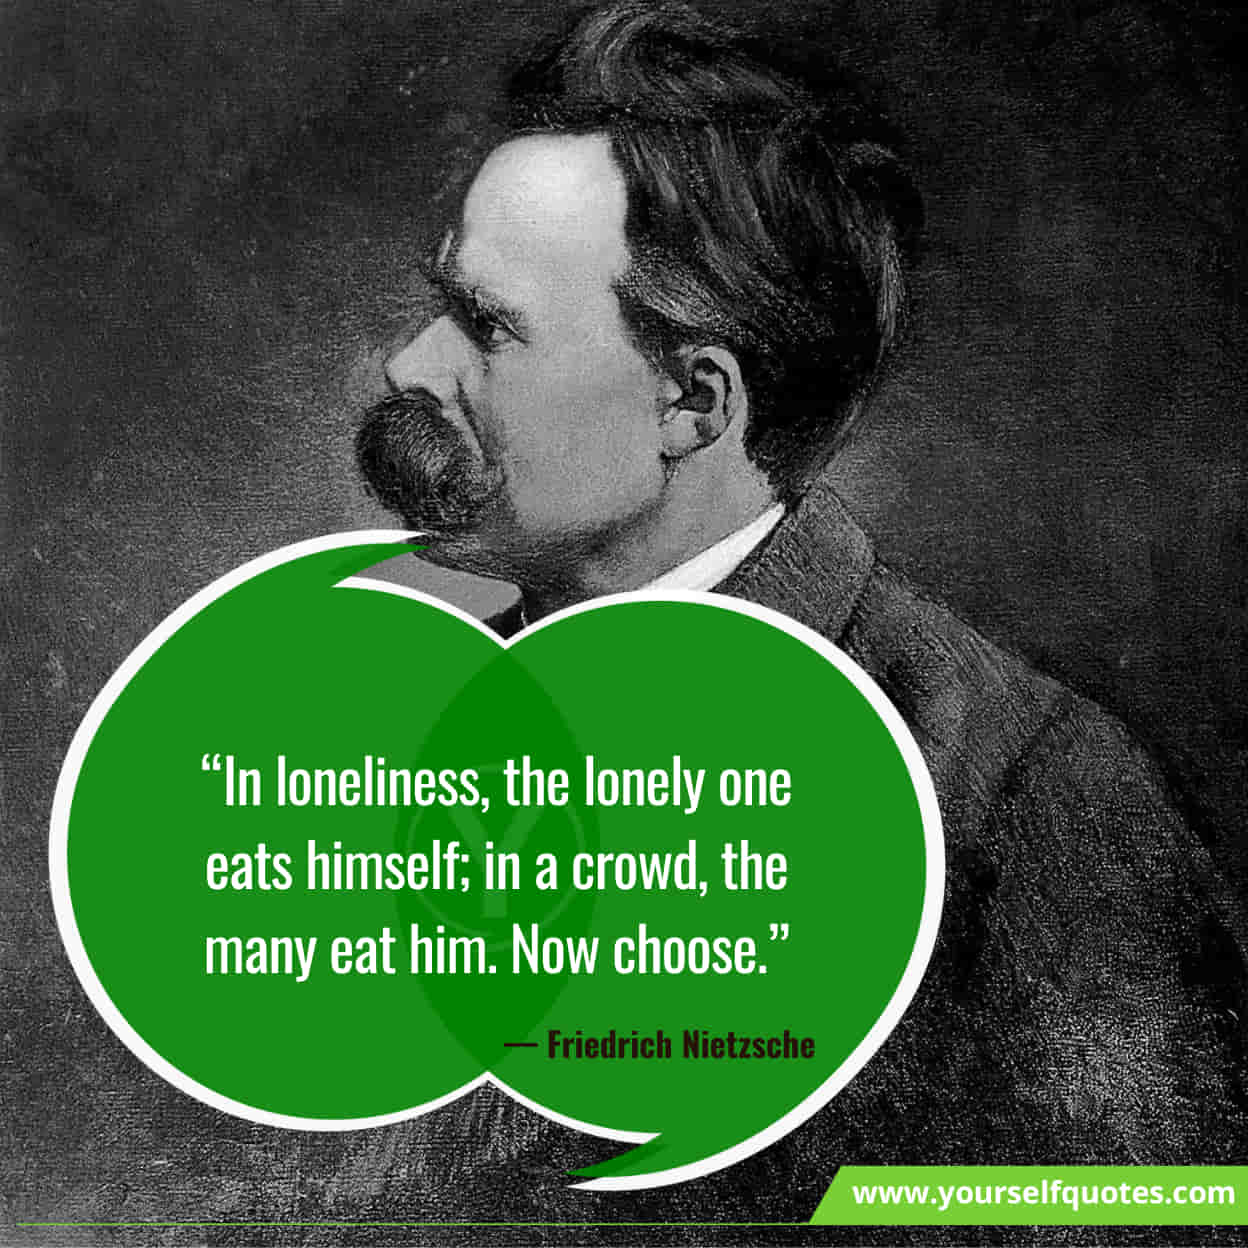 Friedrich Nietzsche’s Quotes About Loneliness